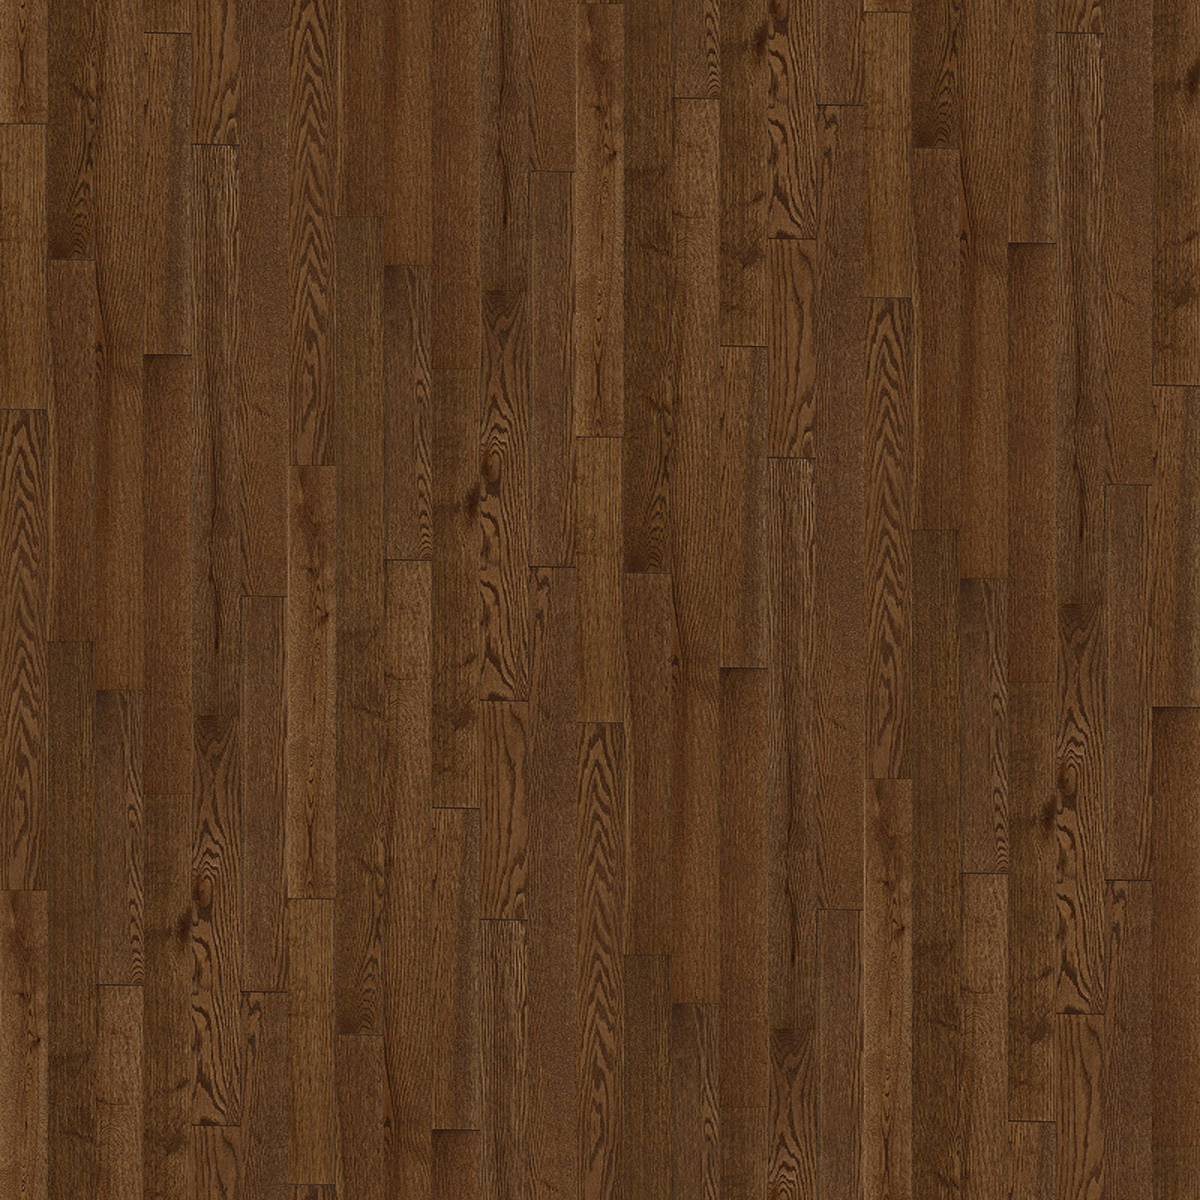 Tree Bark Red Oak Hardwood Flooring, Appalachian Real Hardwood Floors